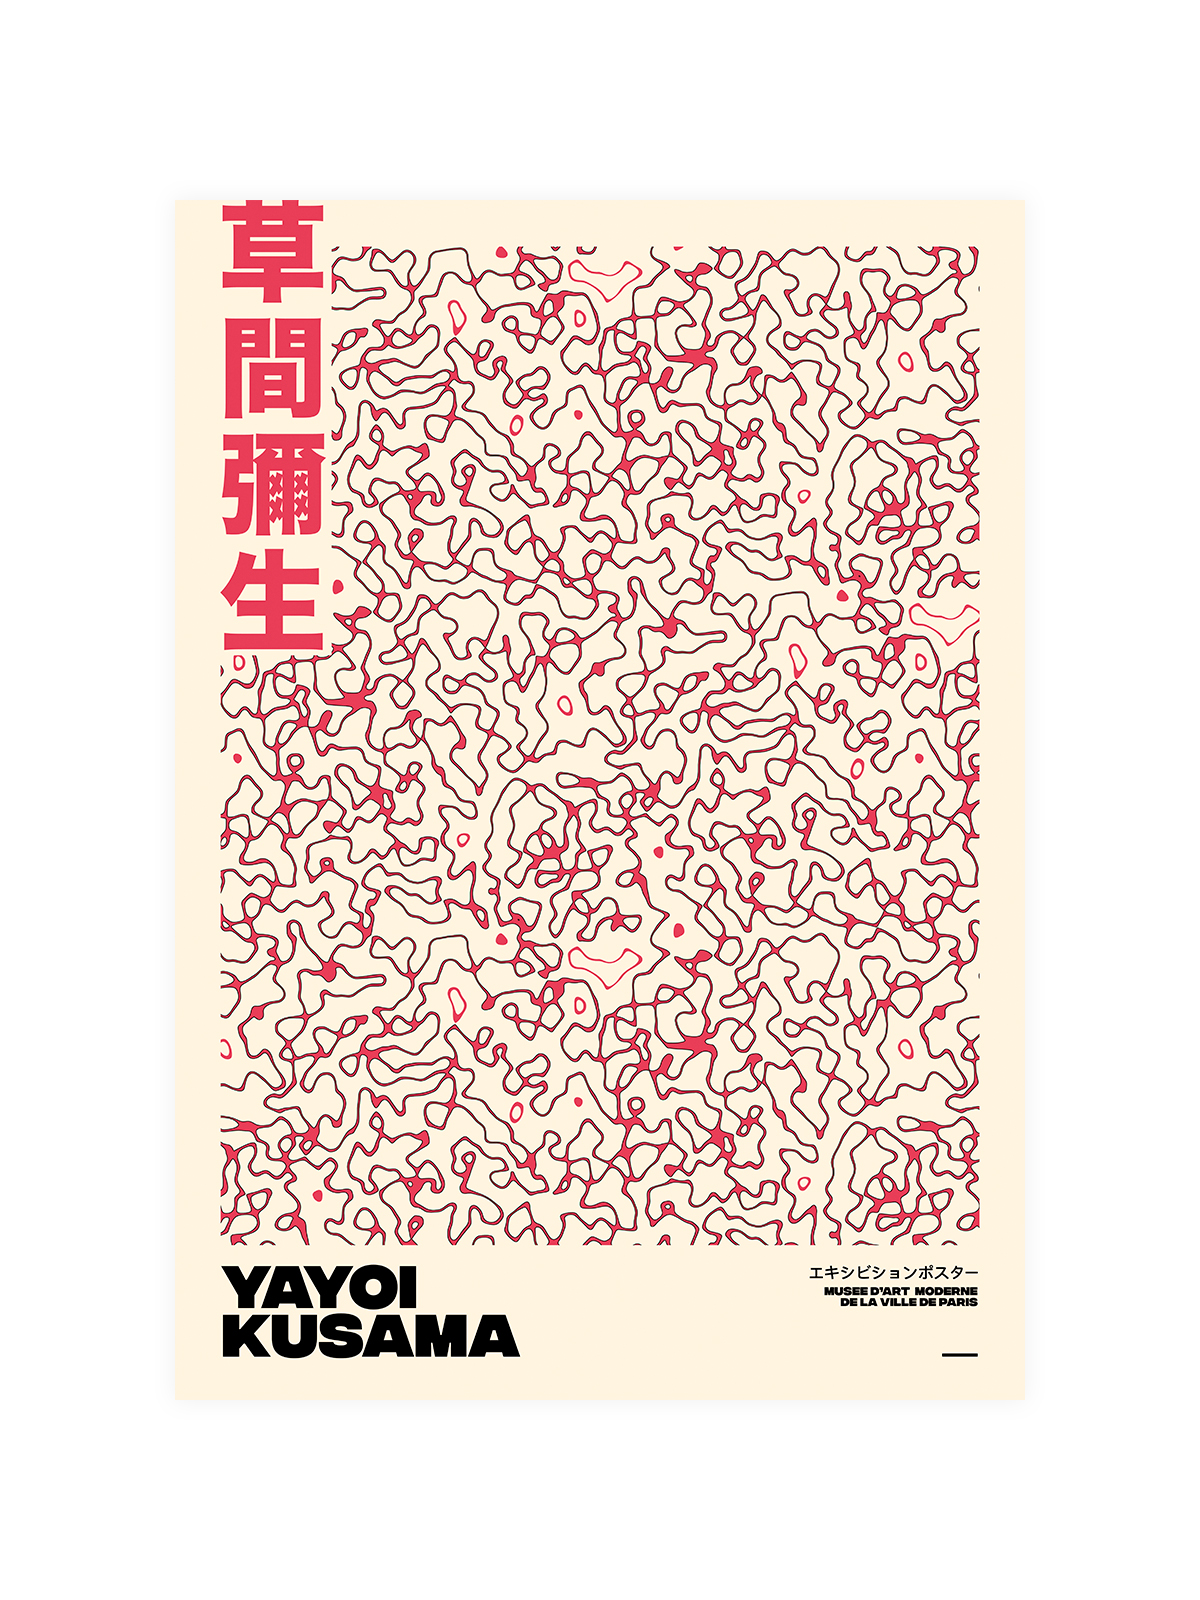 Yayoi Kusama Paris Exhibition Poster